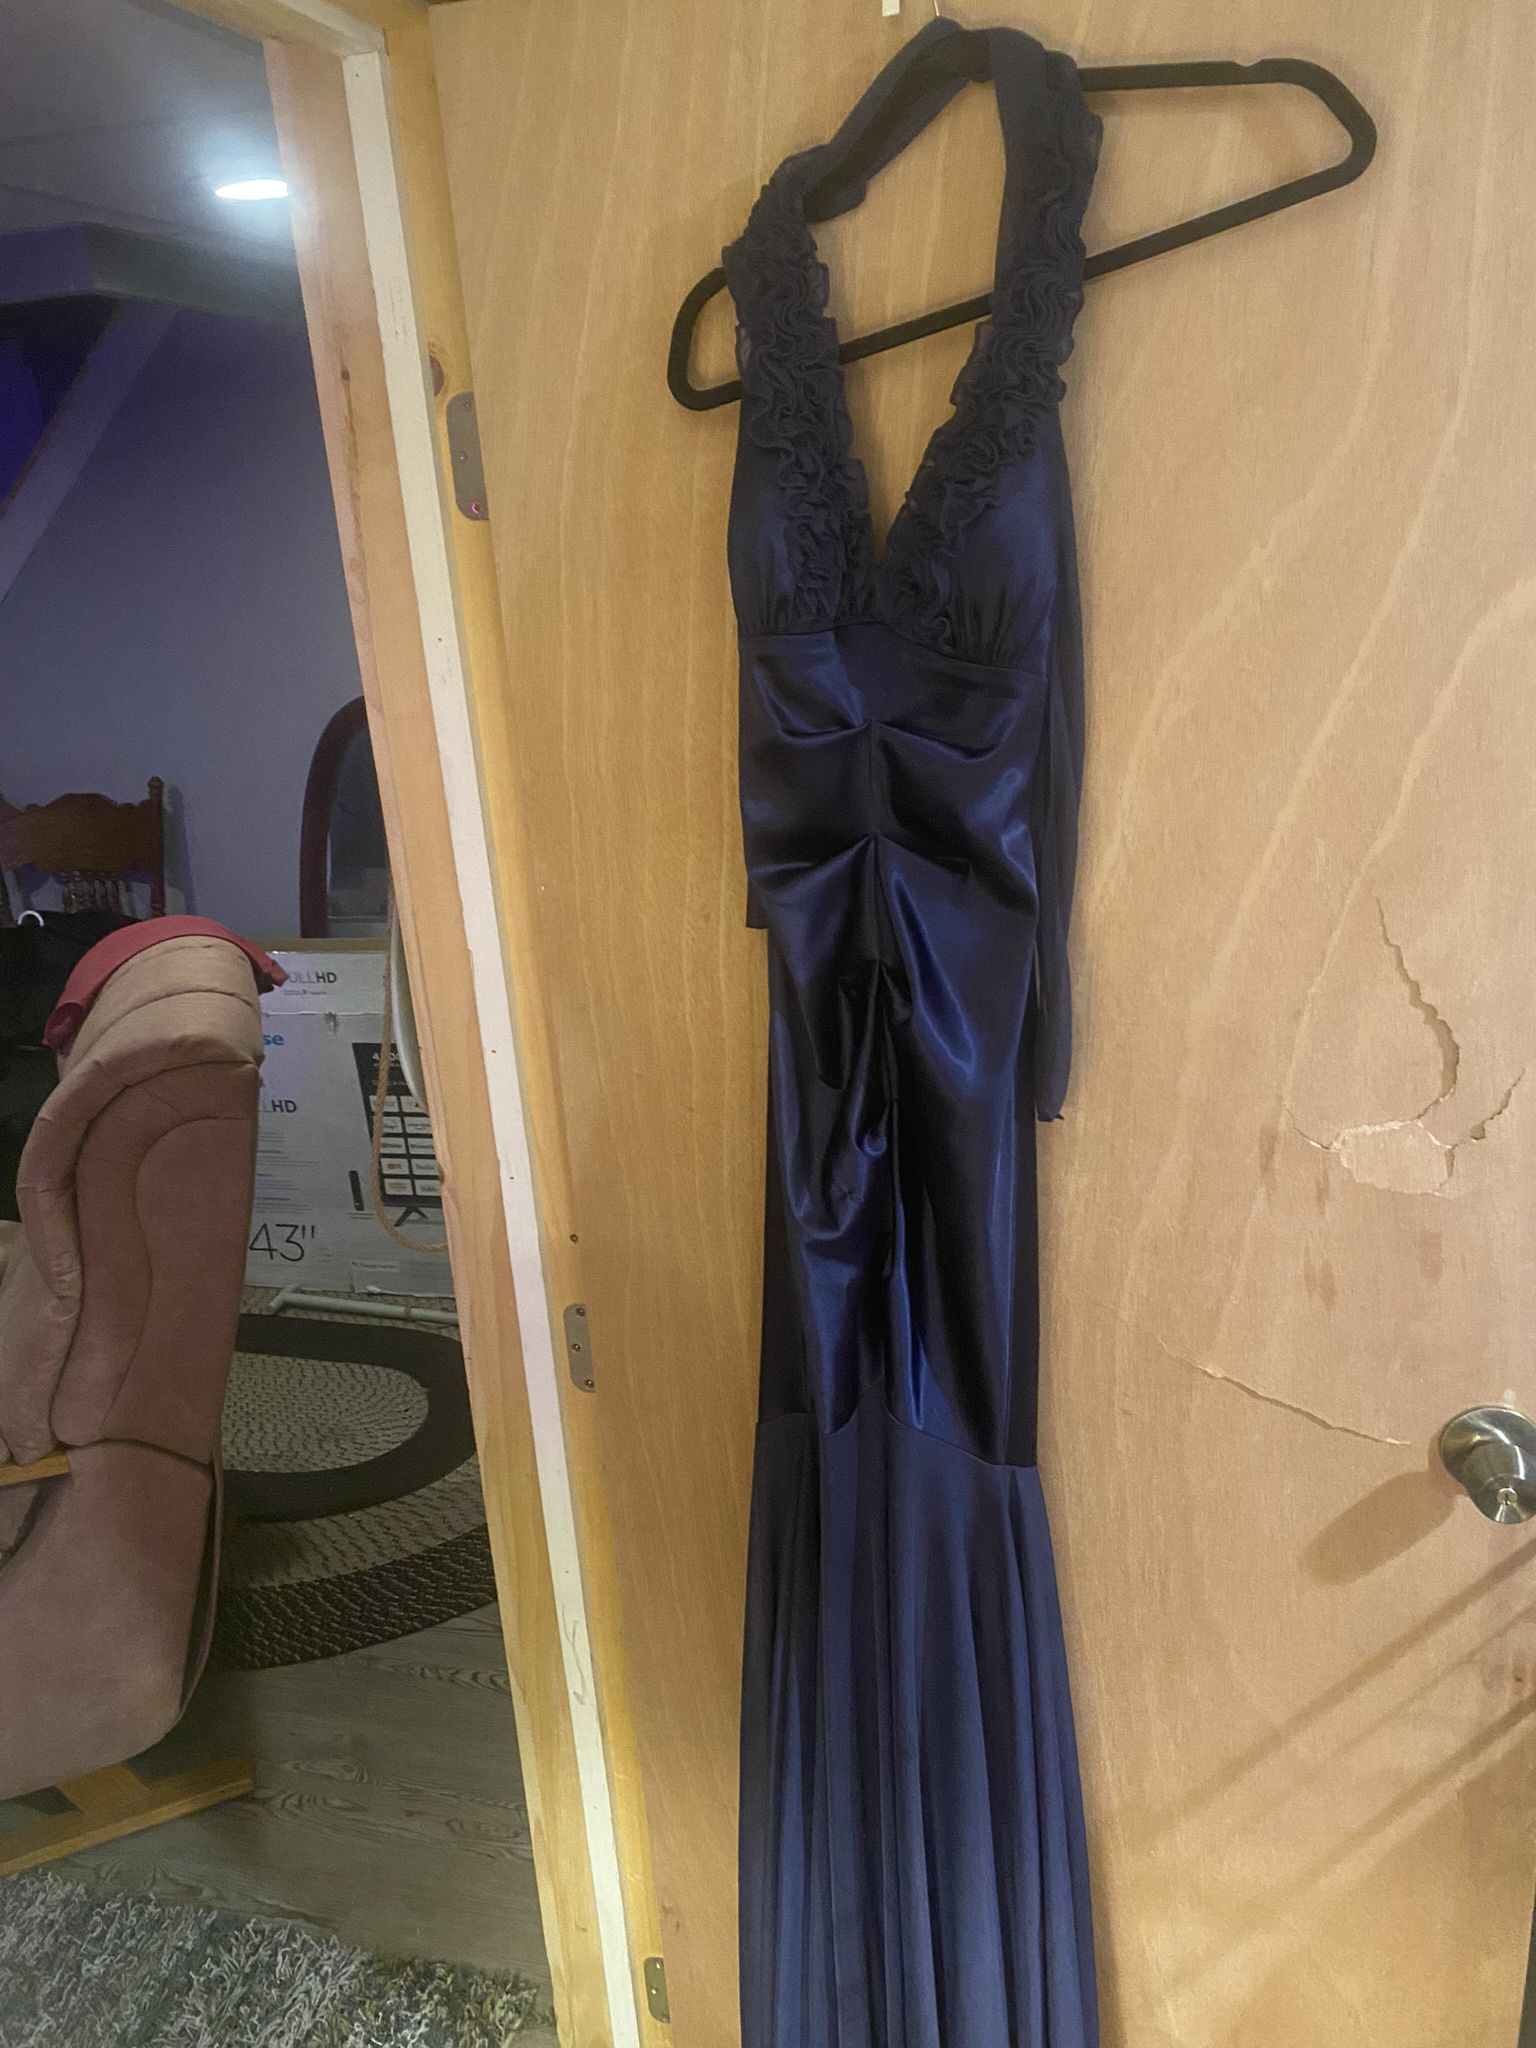 Purple Prom Dress